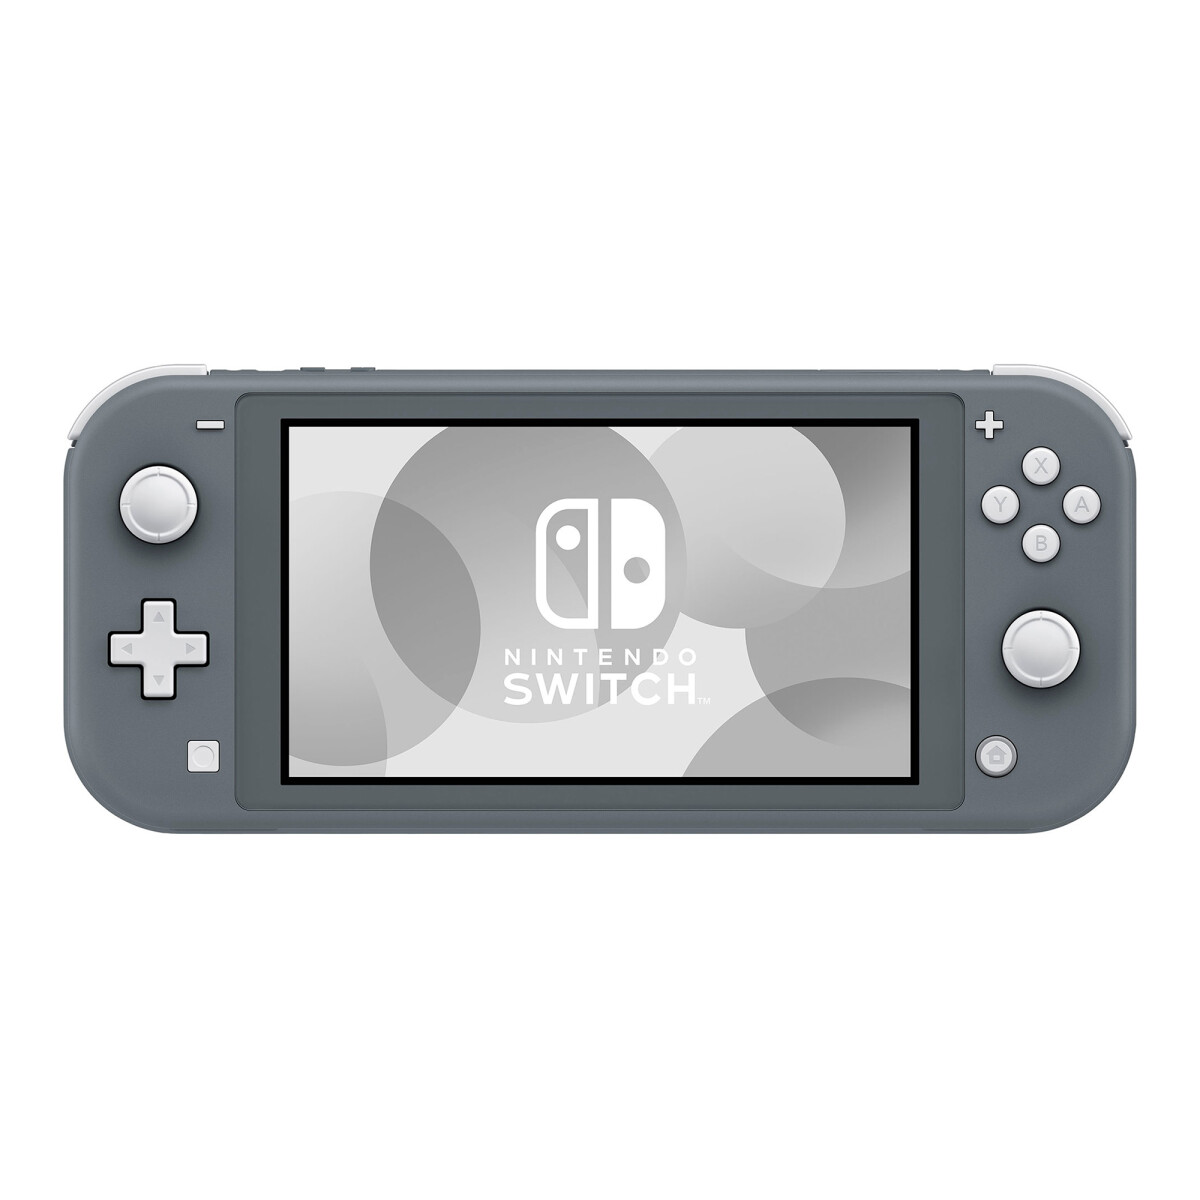 Nintendo - Consola Switch Lite - Compacta y Ligera. Controles Integrados. - 001 